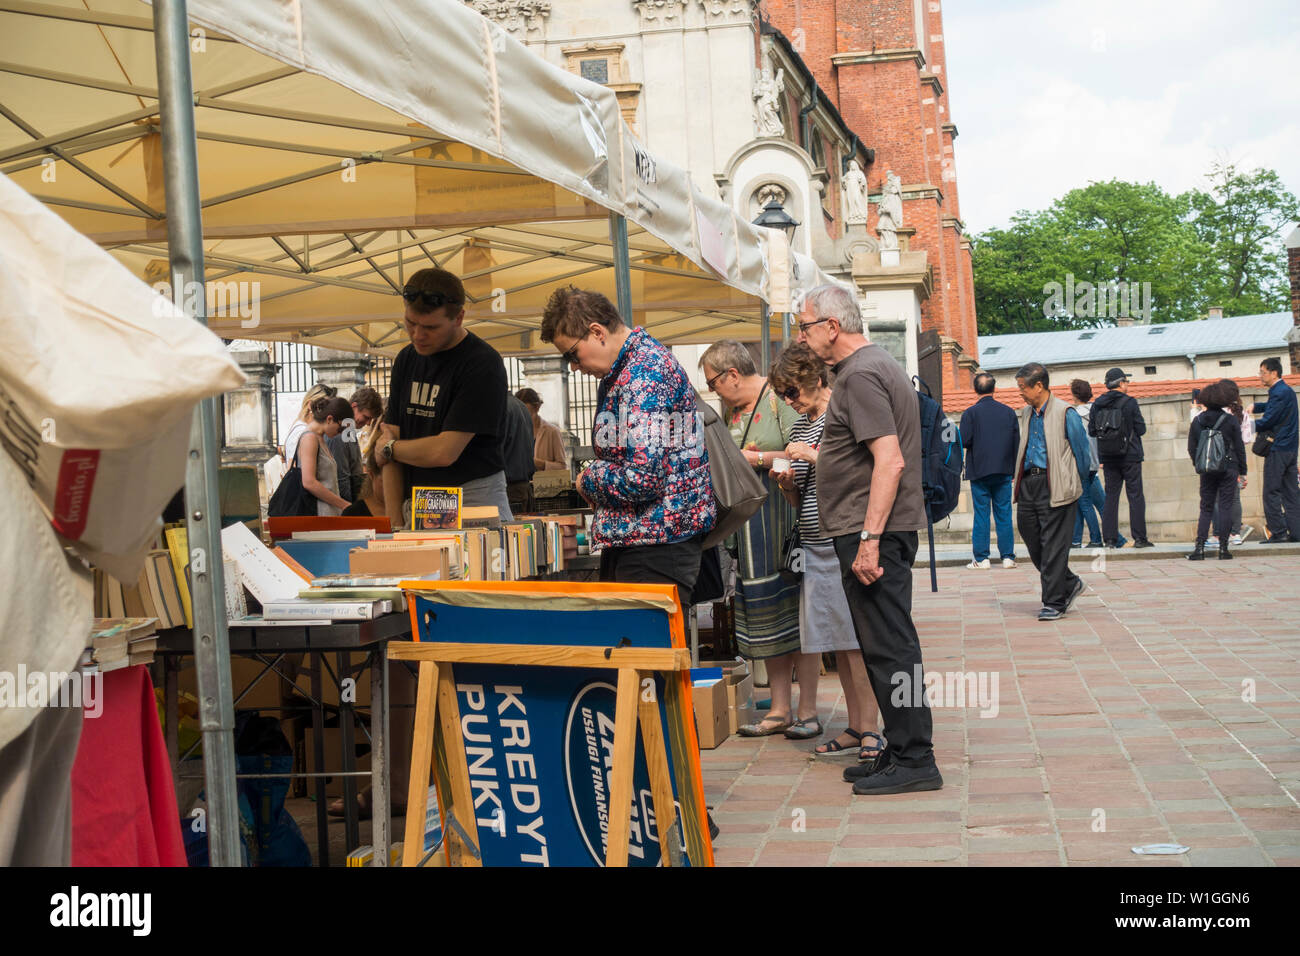 Tourists looking for Books in Krakow Flea Market, Krakow, Poland, Europe, Stock Photo